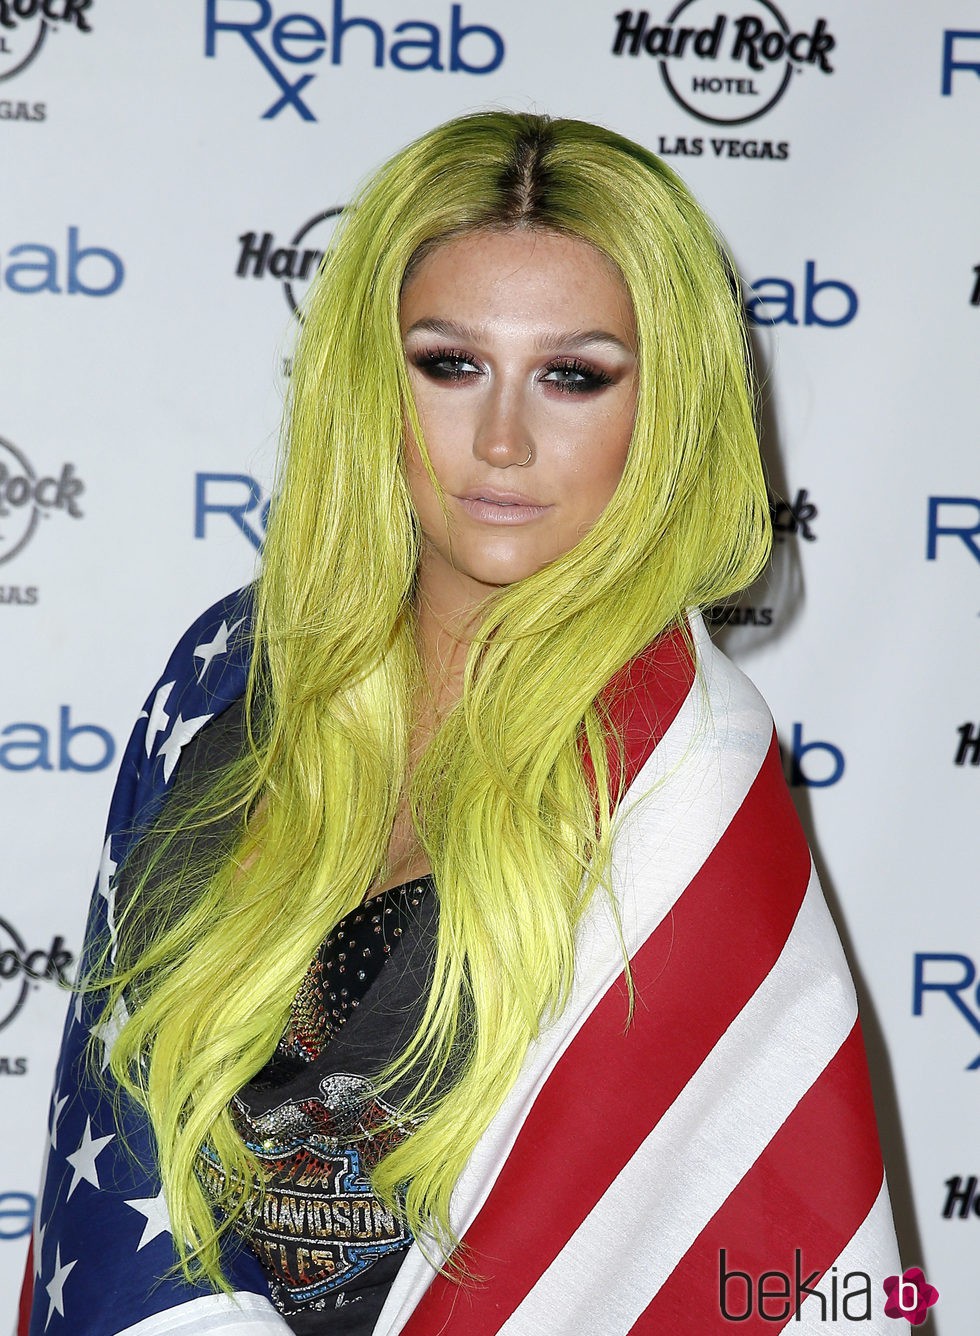 Kesha luce una melena amarillo pollo con raíces negras